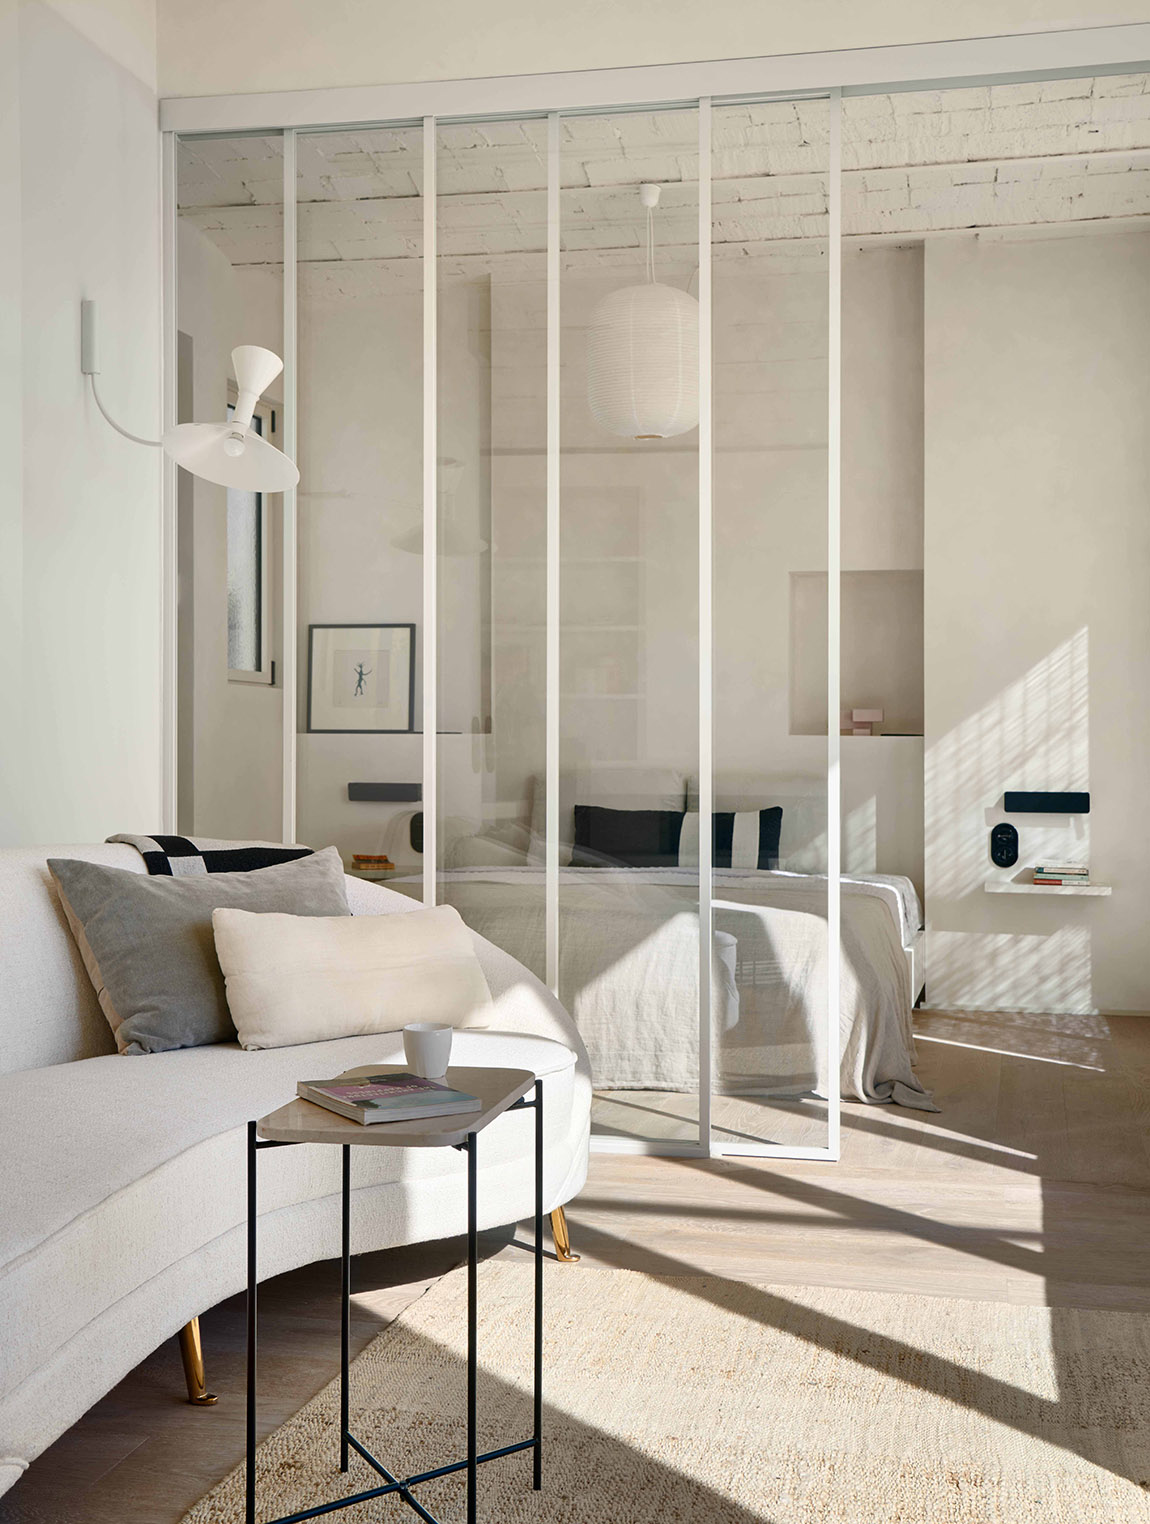 Georg Kayser Studio: Timeless and elegant spaces infused with warm minimalism